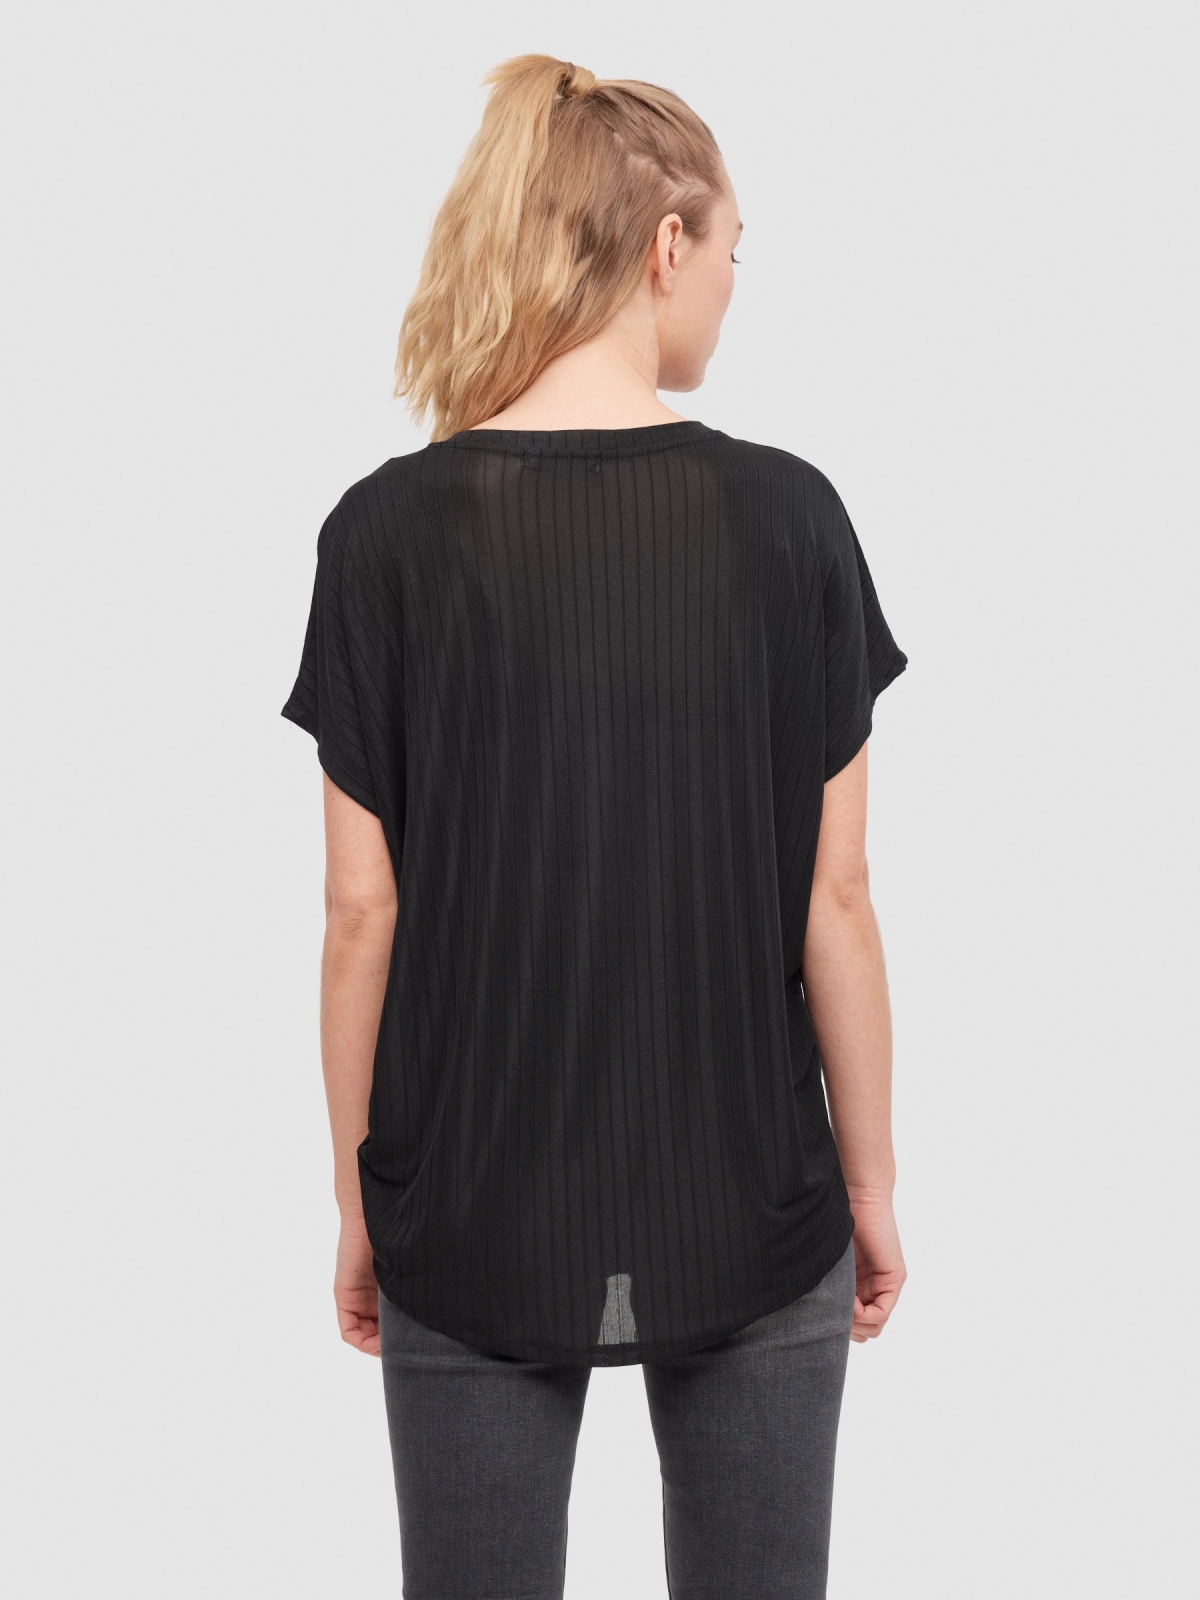 Camiseta rib bajo asimétrico negro vista media trasera